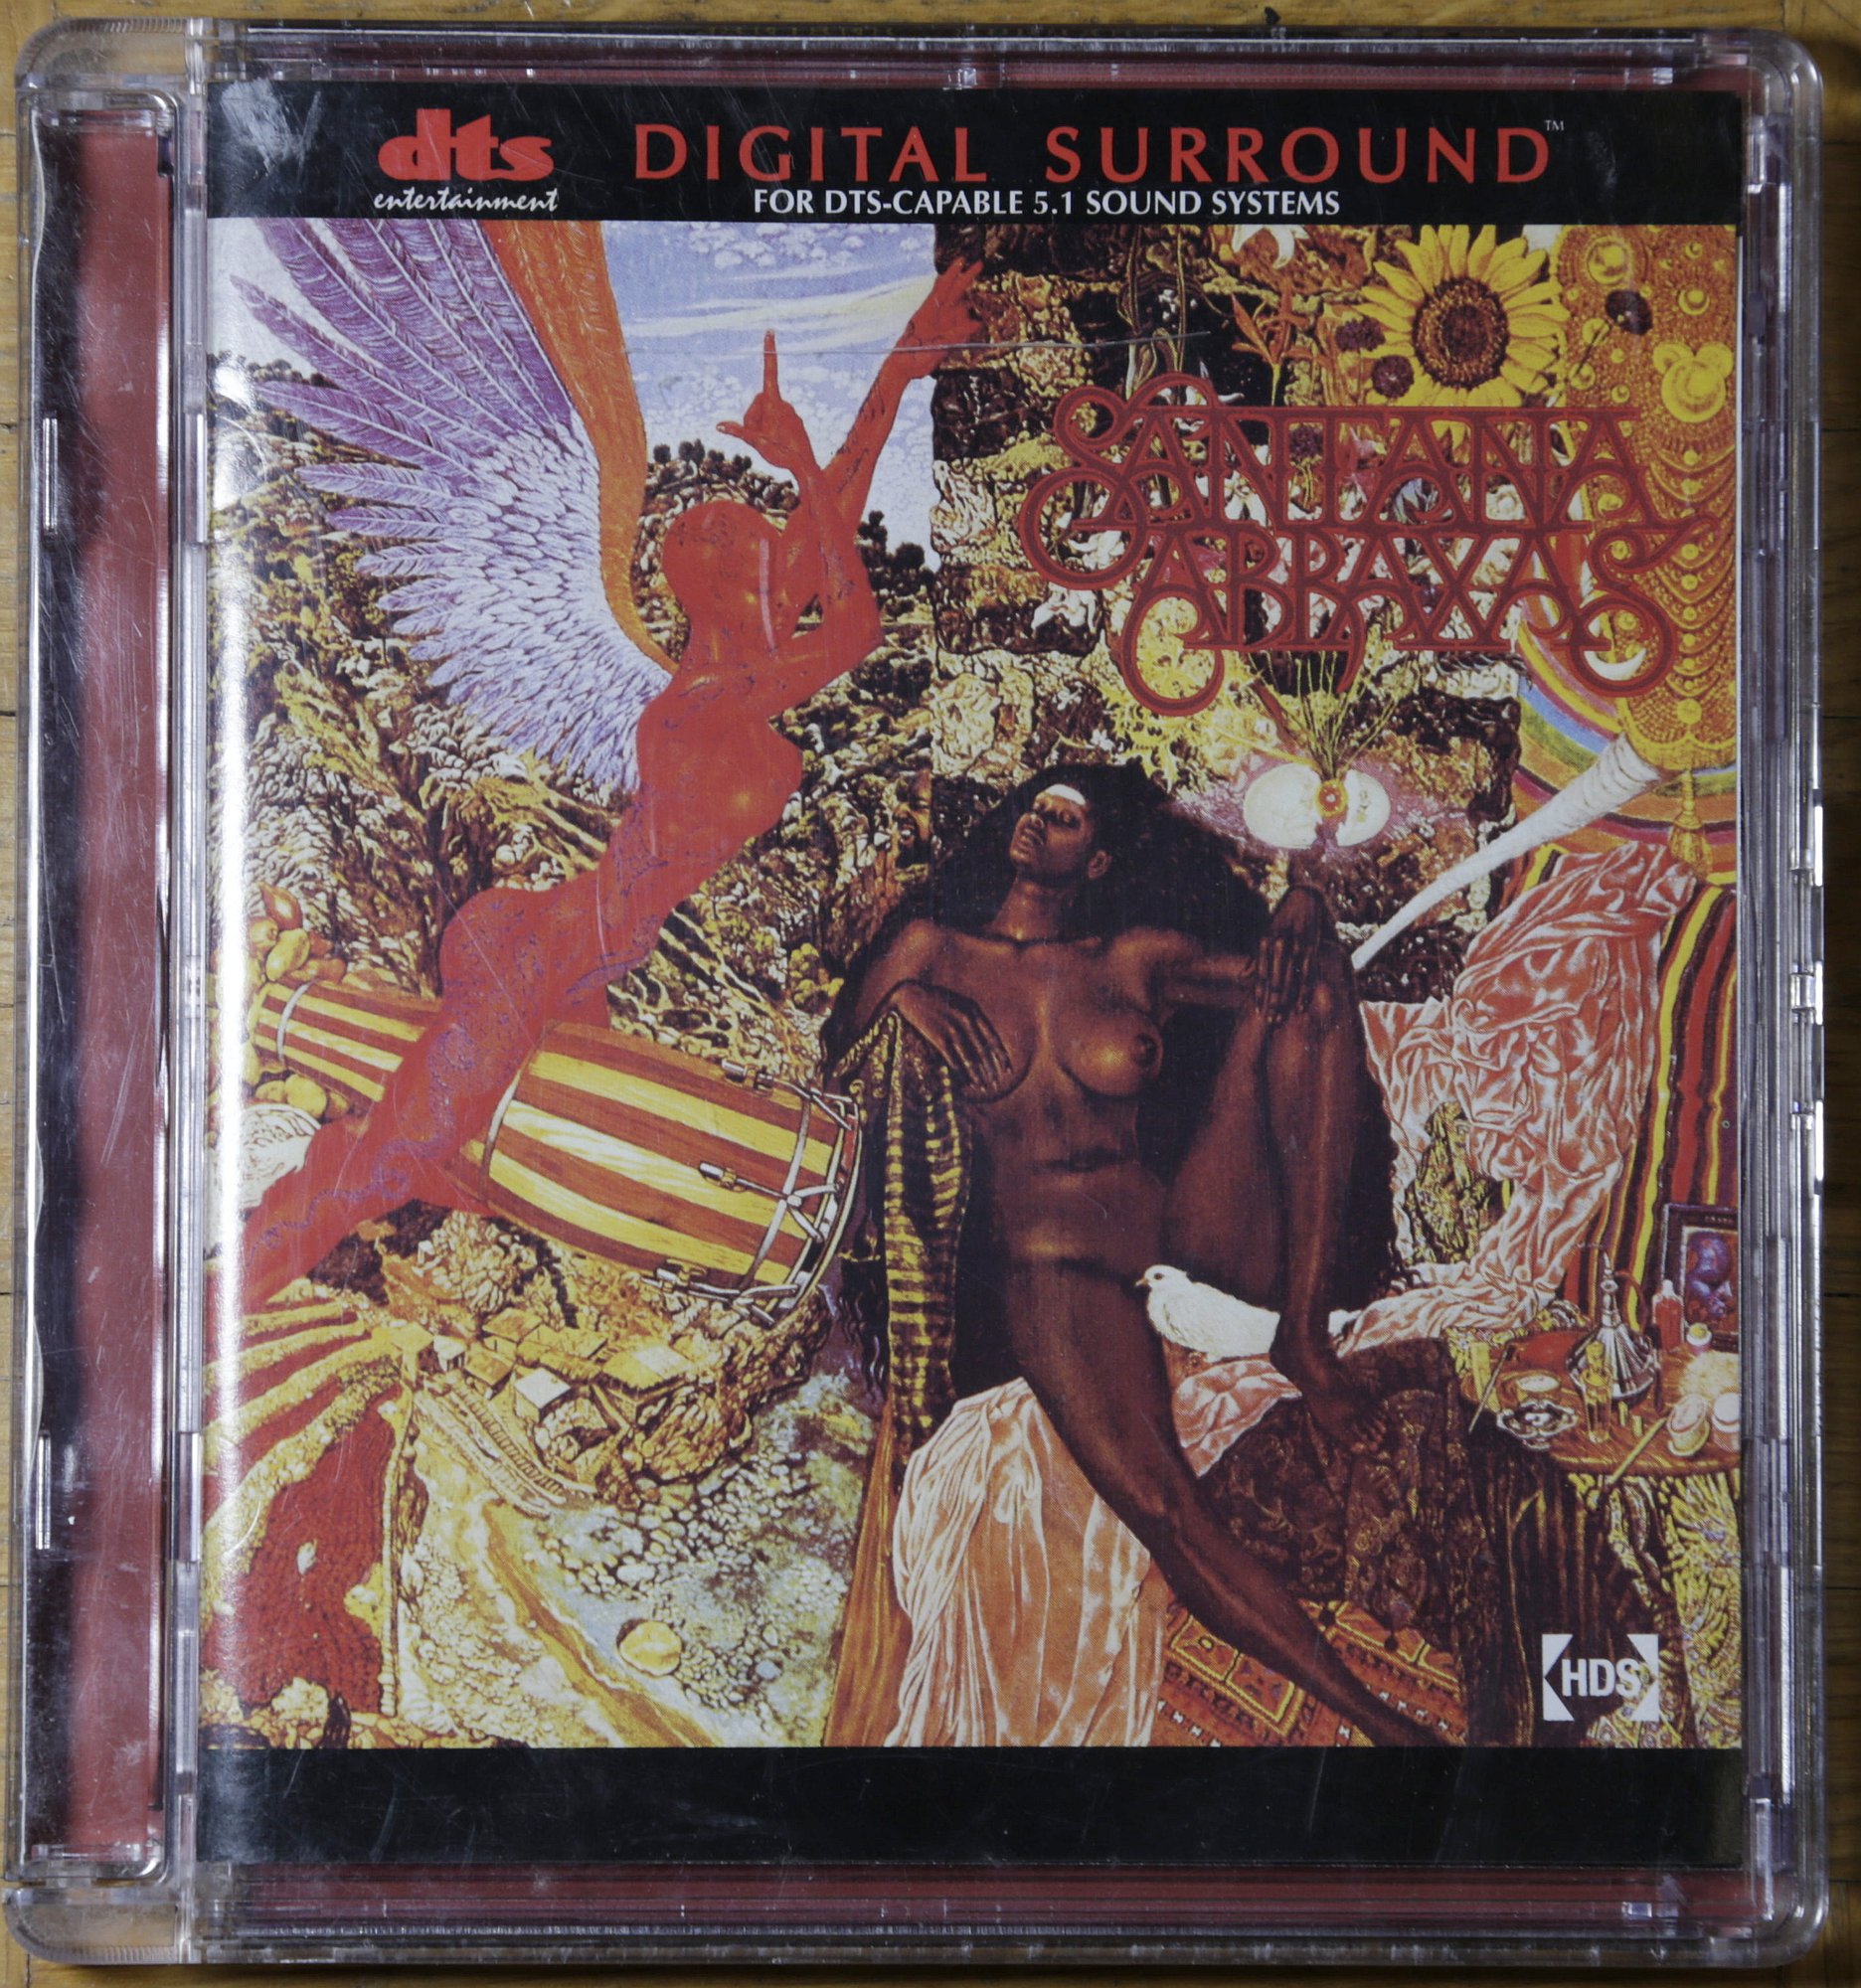 Santana Abraxas DTS CD Surround Sound Review